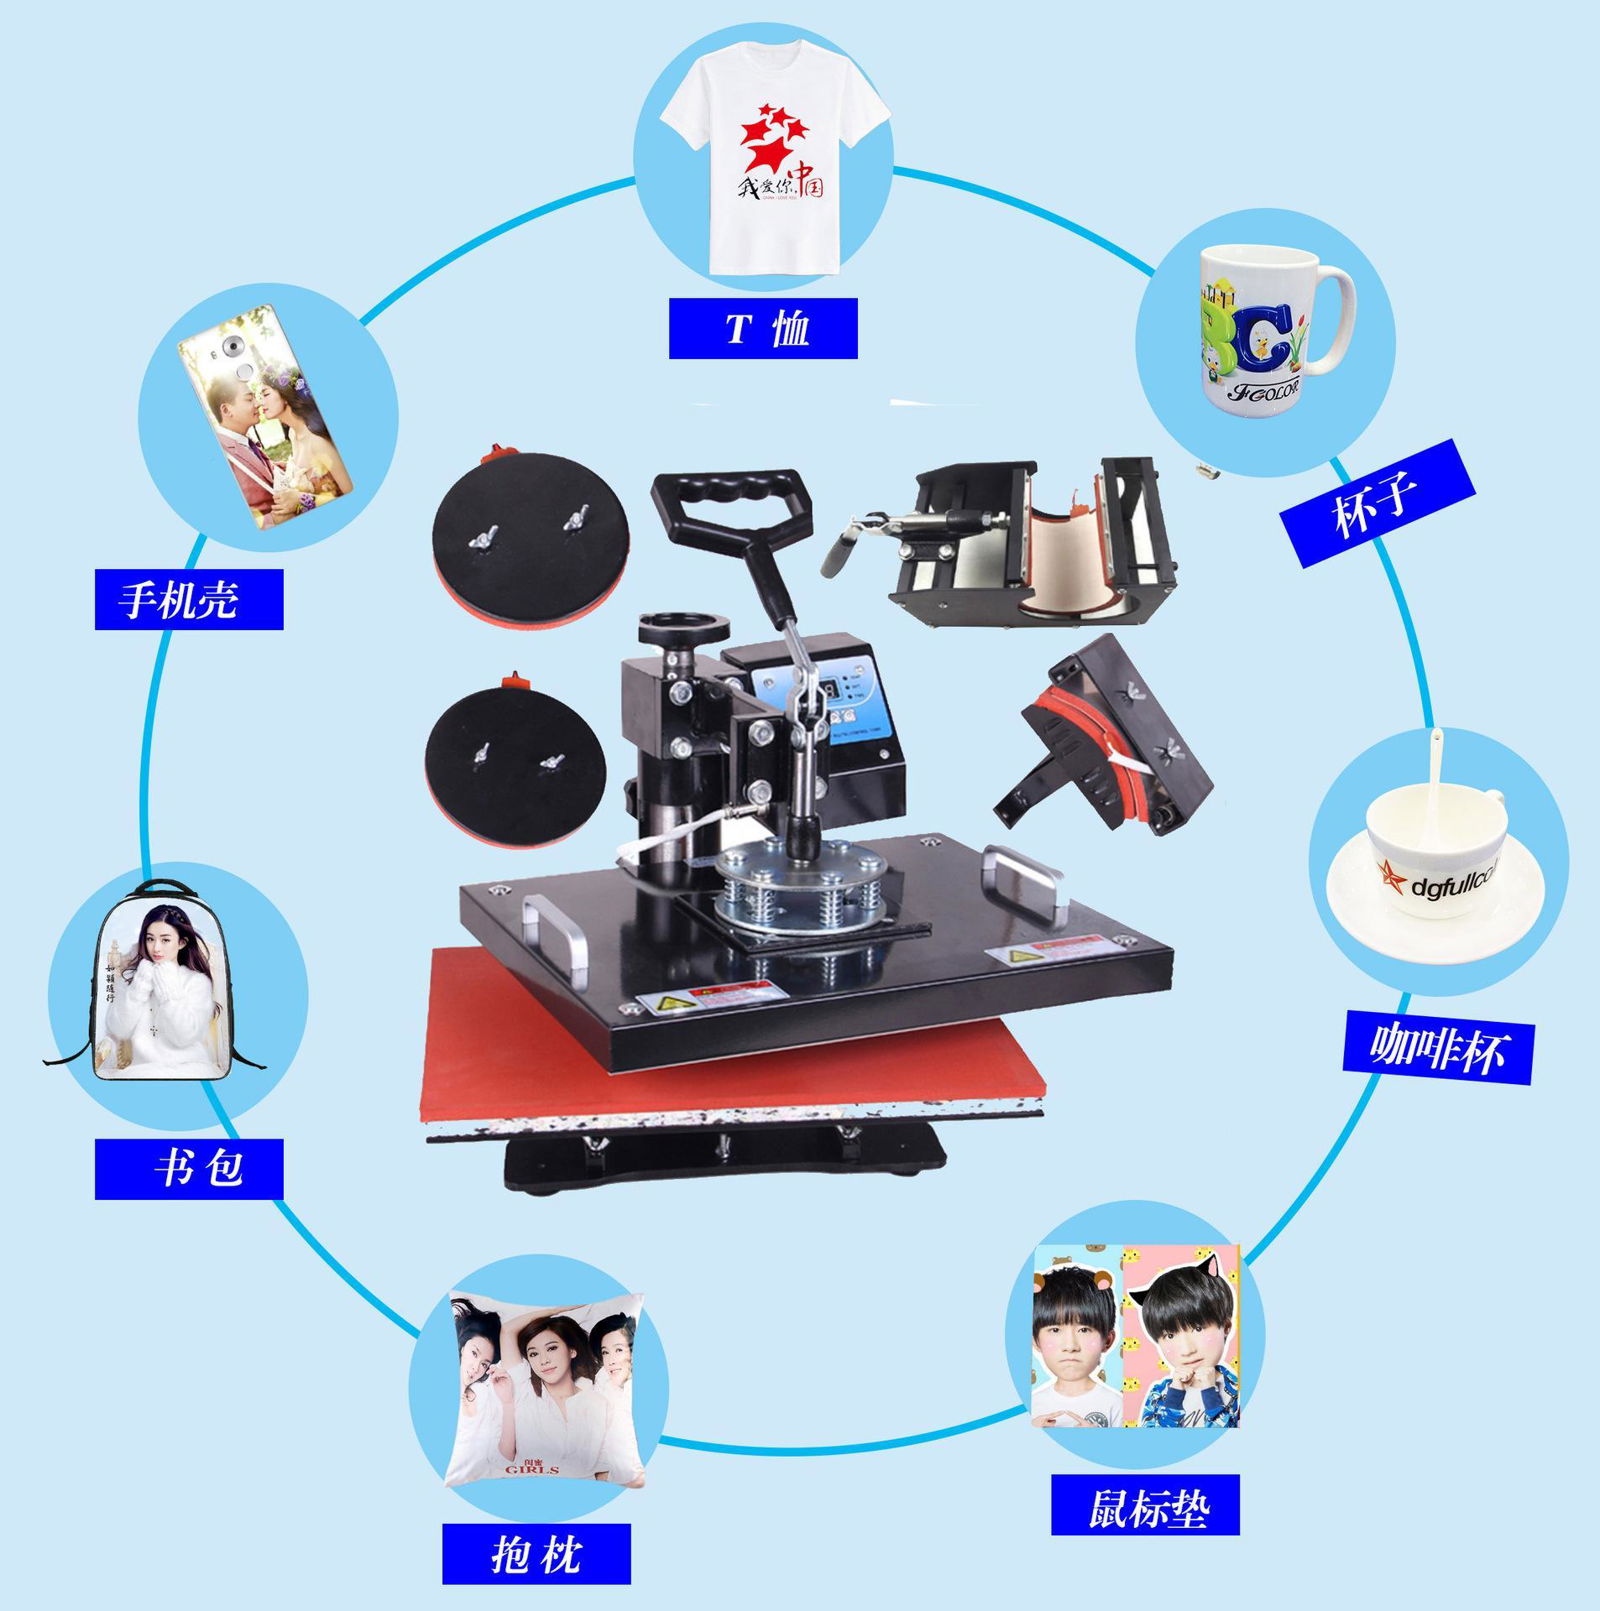 cap transfer,mug press,design machine,image printer,all in 1 transfer 2